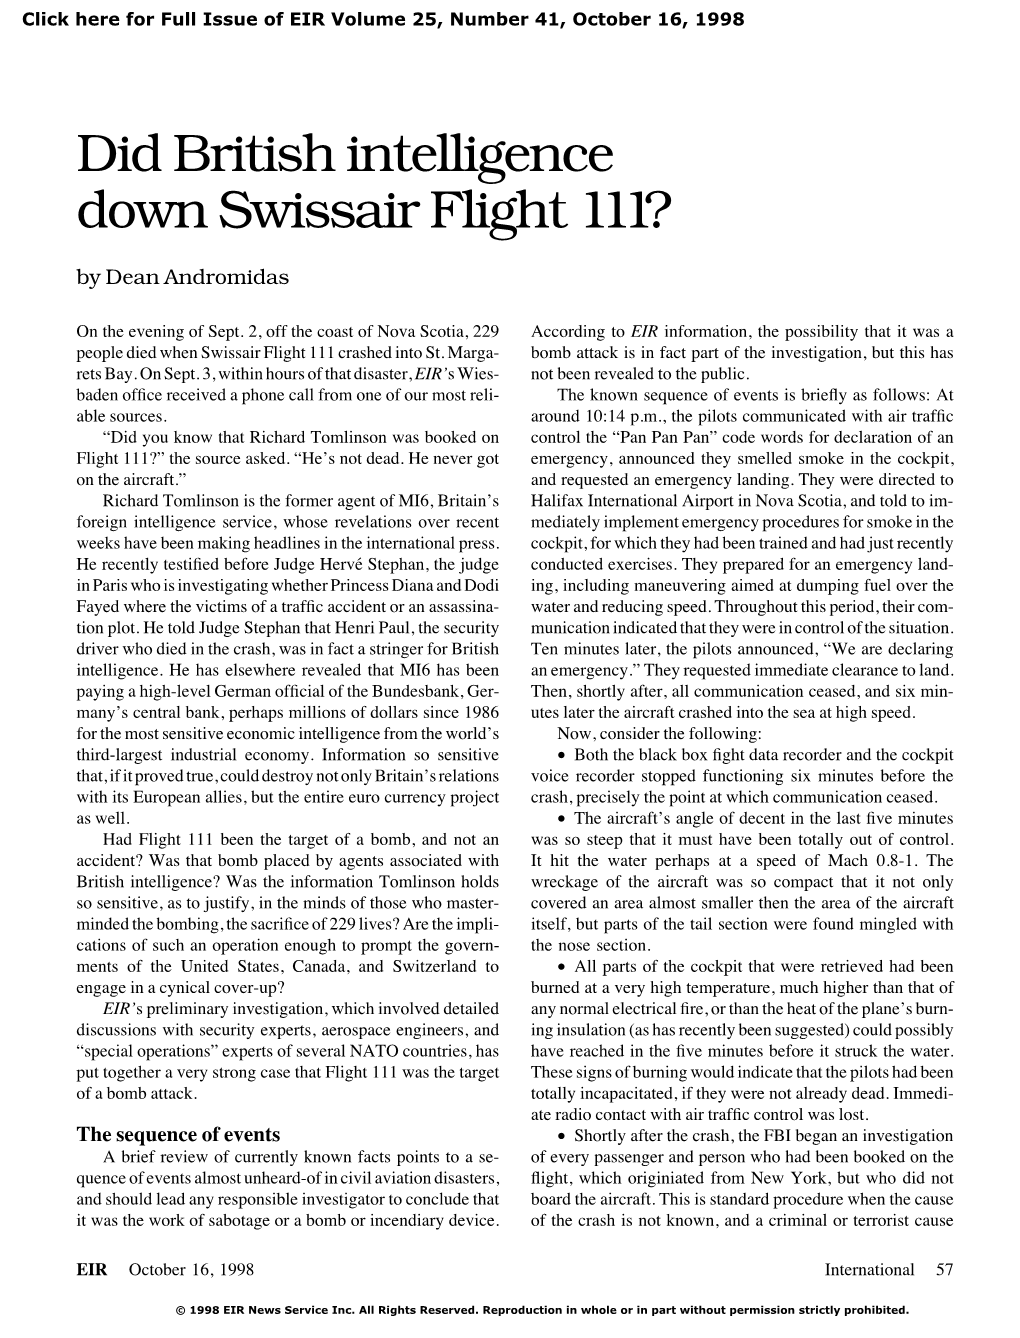 Did British Intelligence Down Swissair Flight 111?